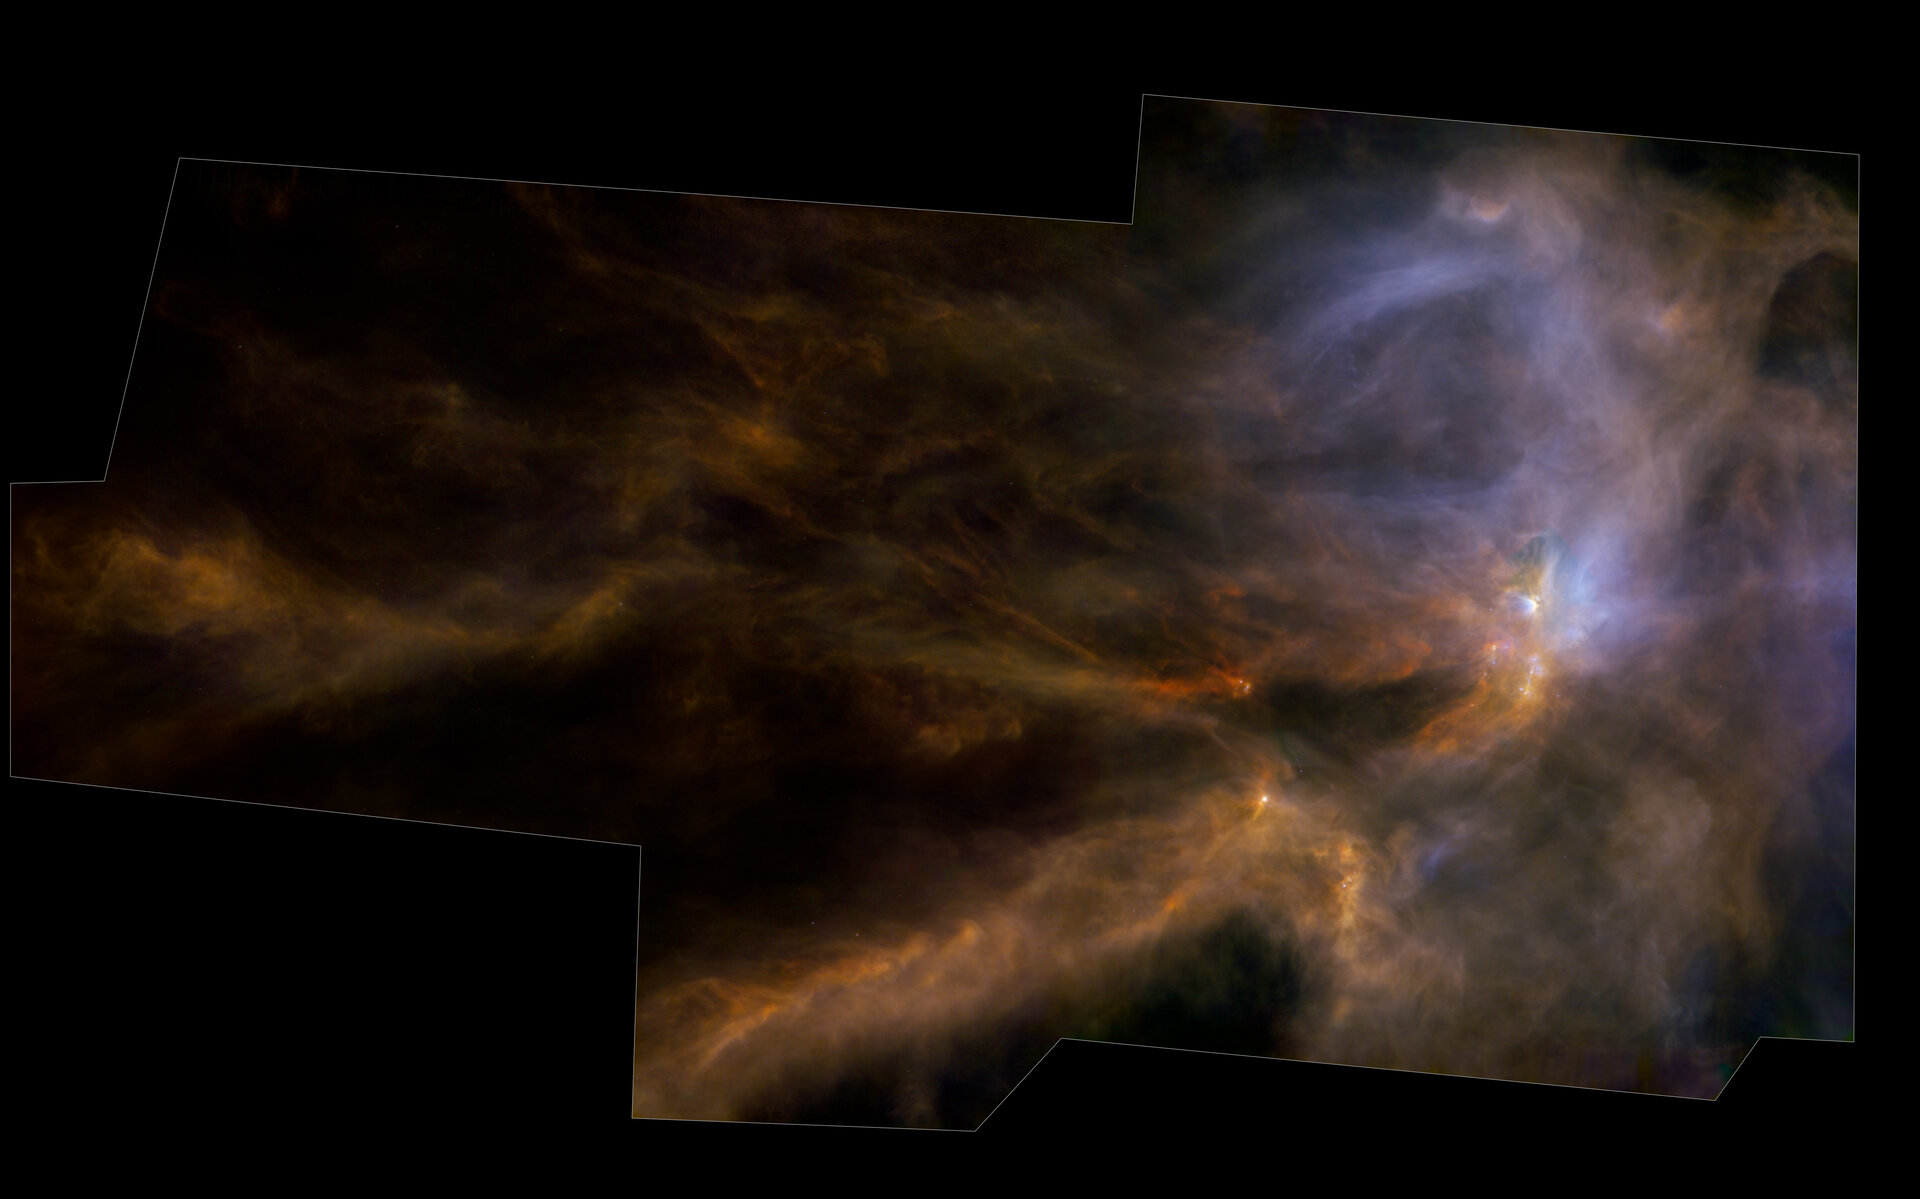 Herschel’s view of a star nursery